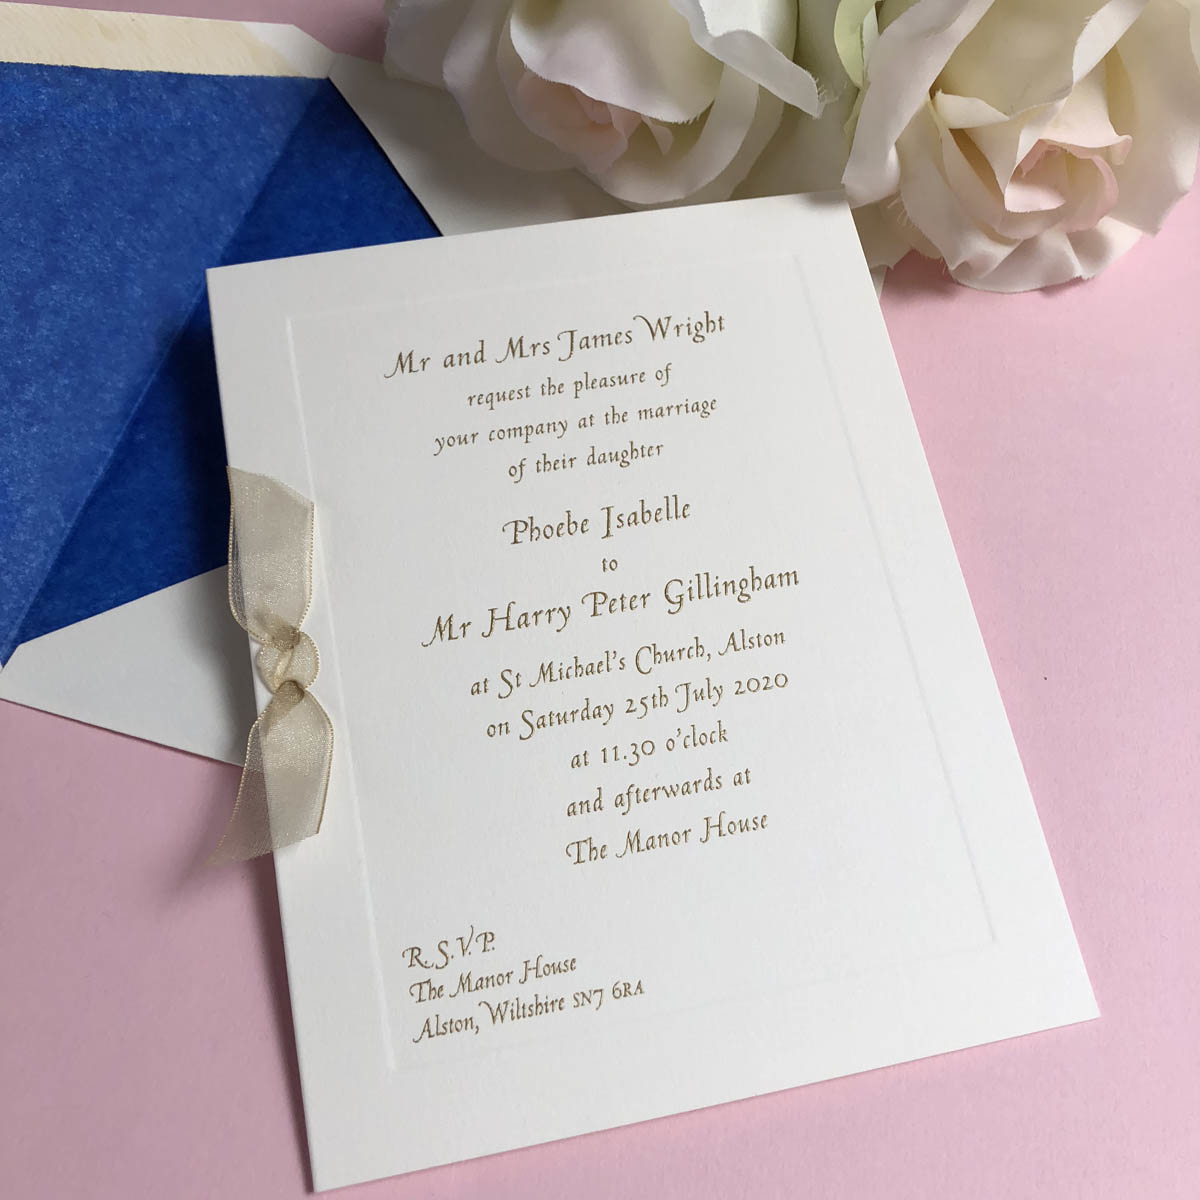 Sultan wedding invitations